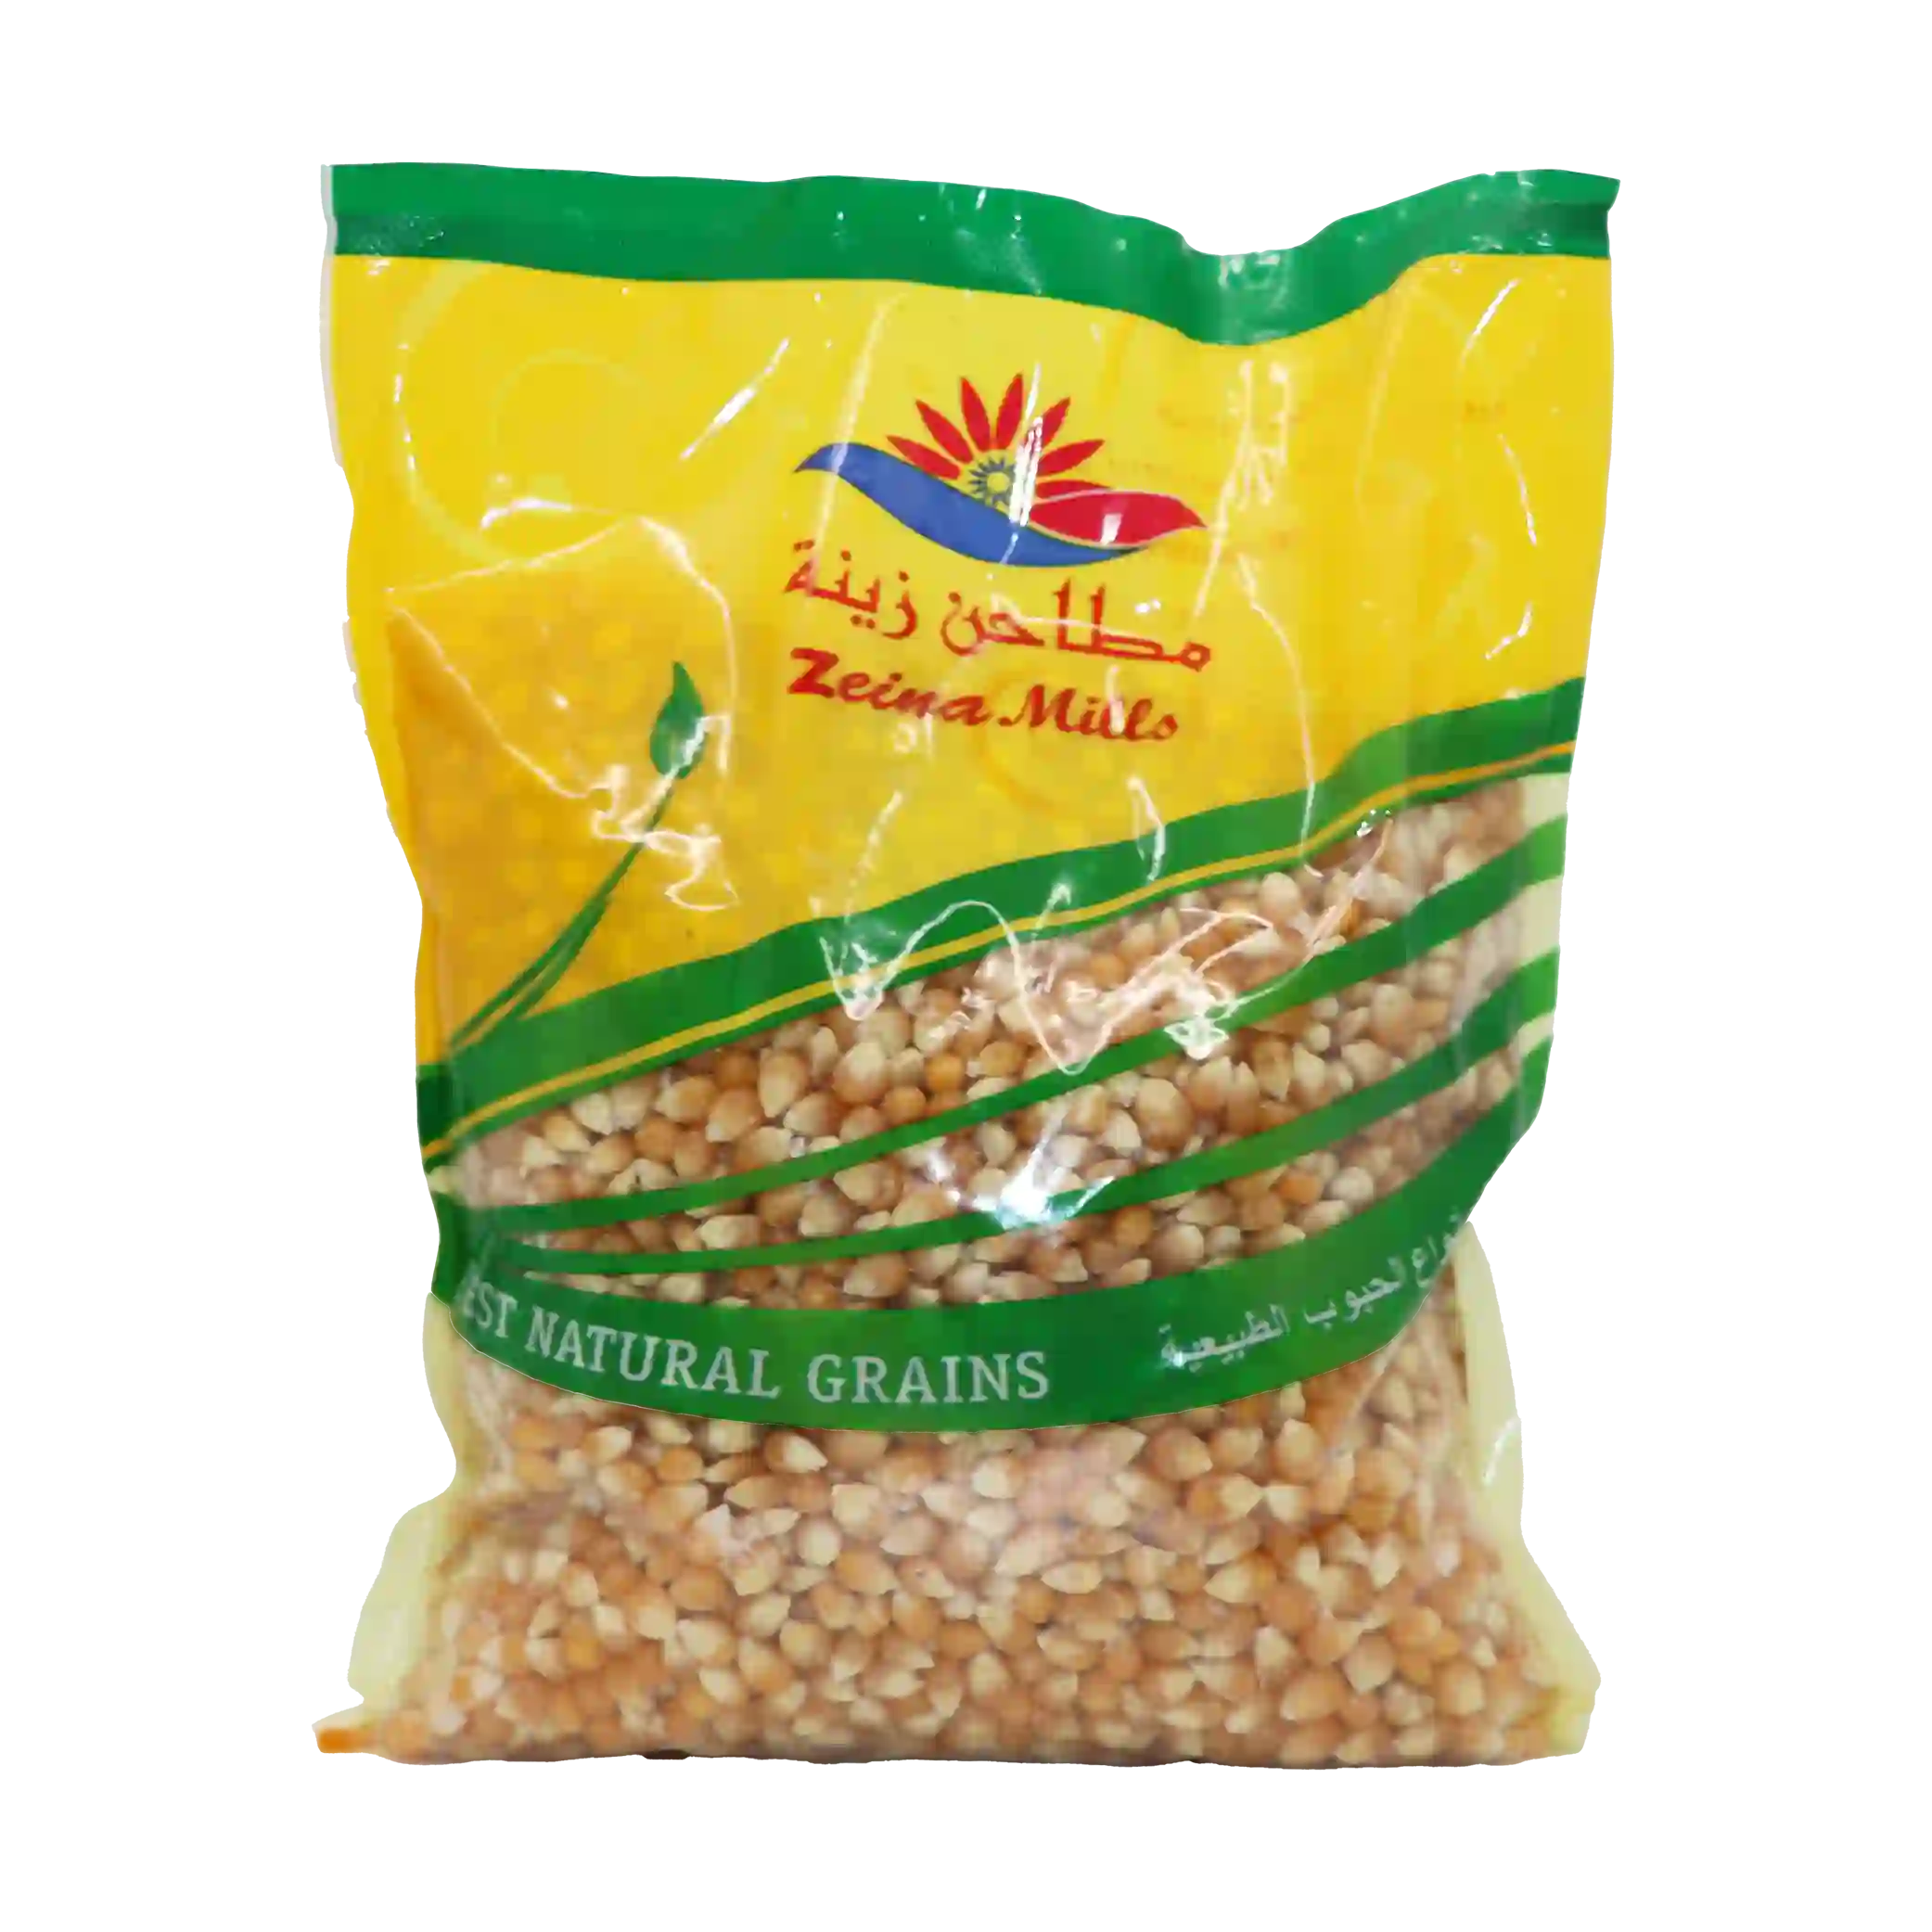 KAC -Popcorn corn - 1 kilo